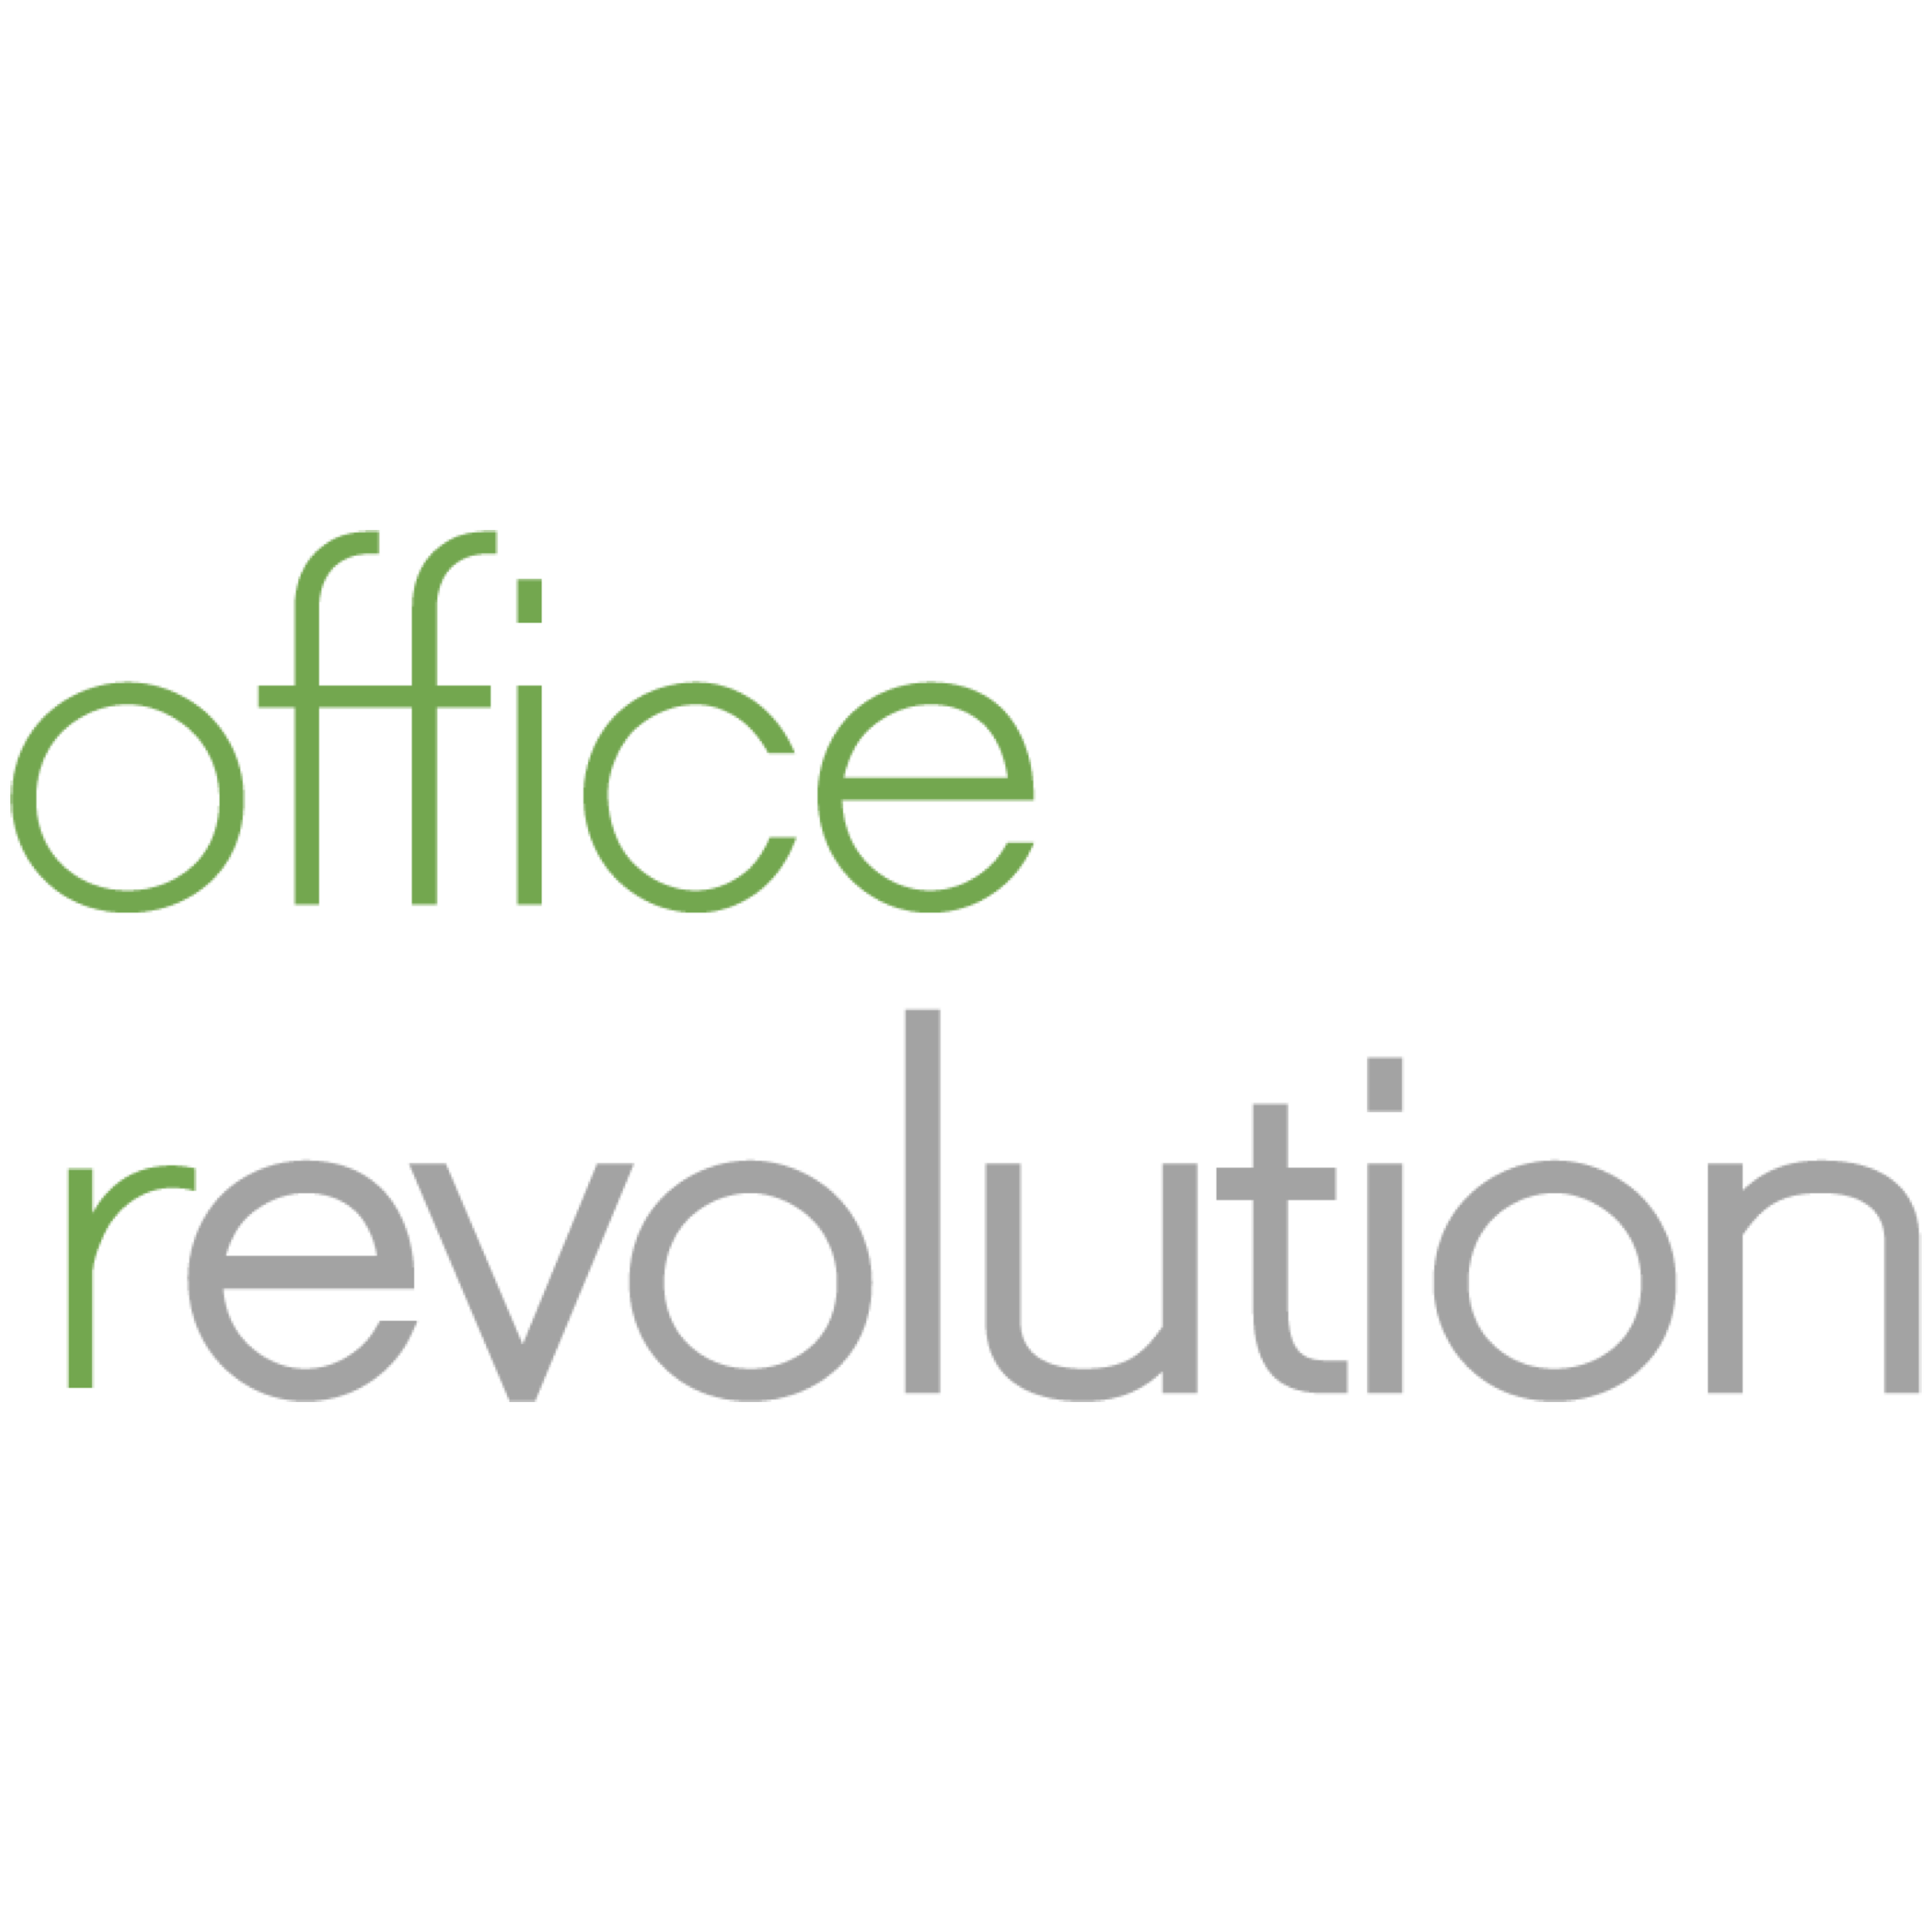 GOLD - Office Revolution.png